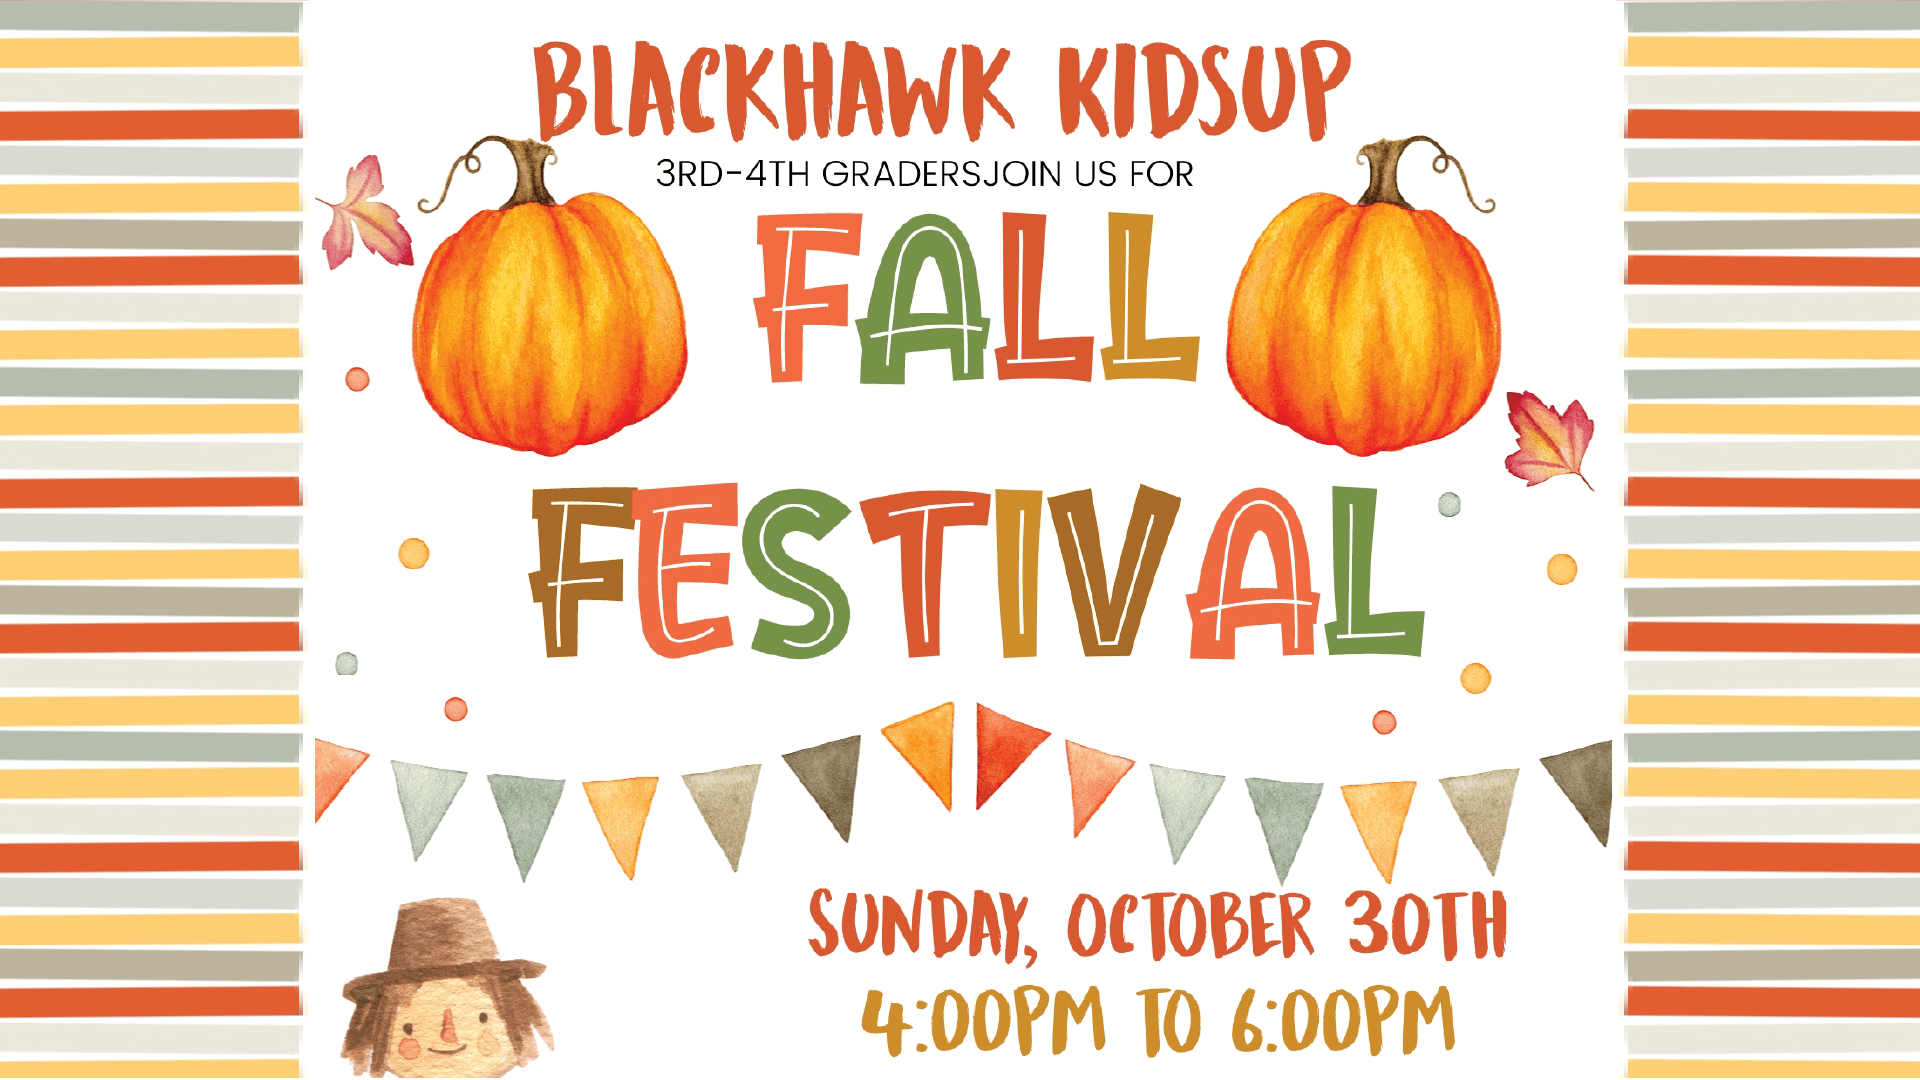 KIDSUP Fall Festival – OCTOBER 30TH